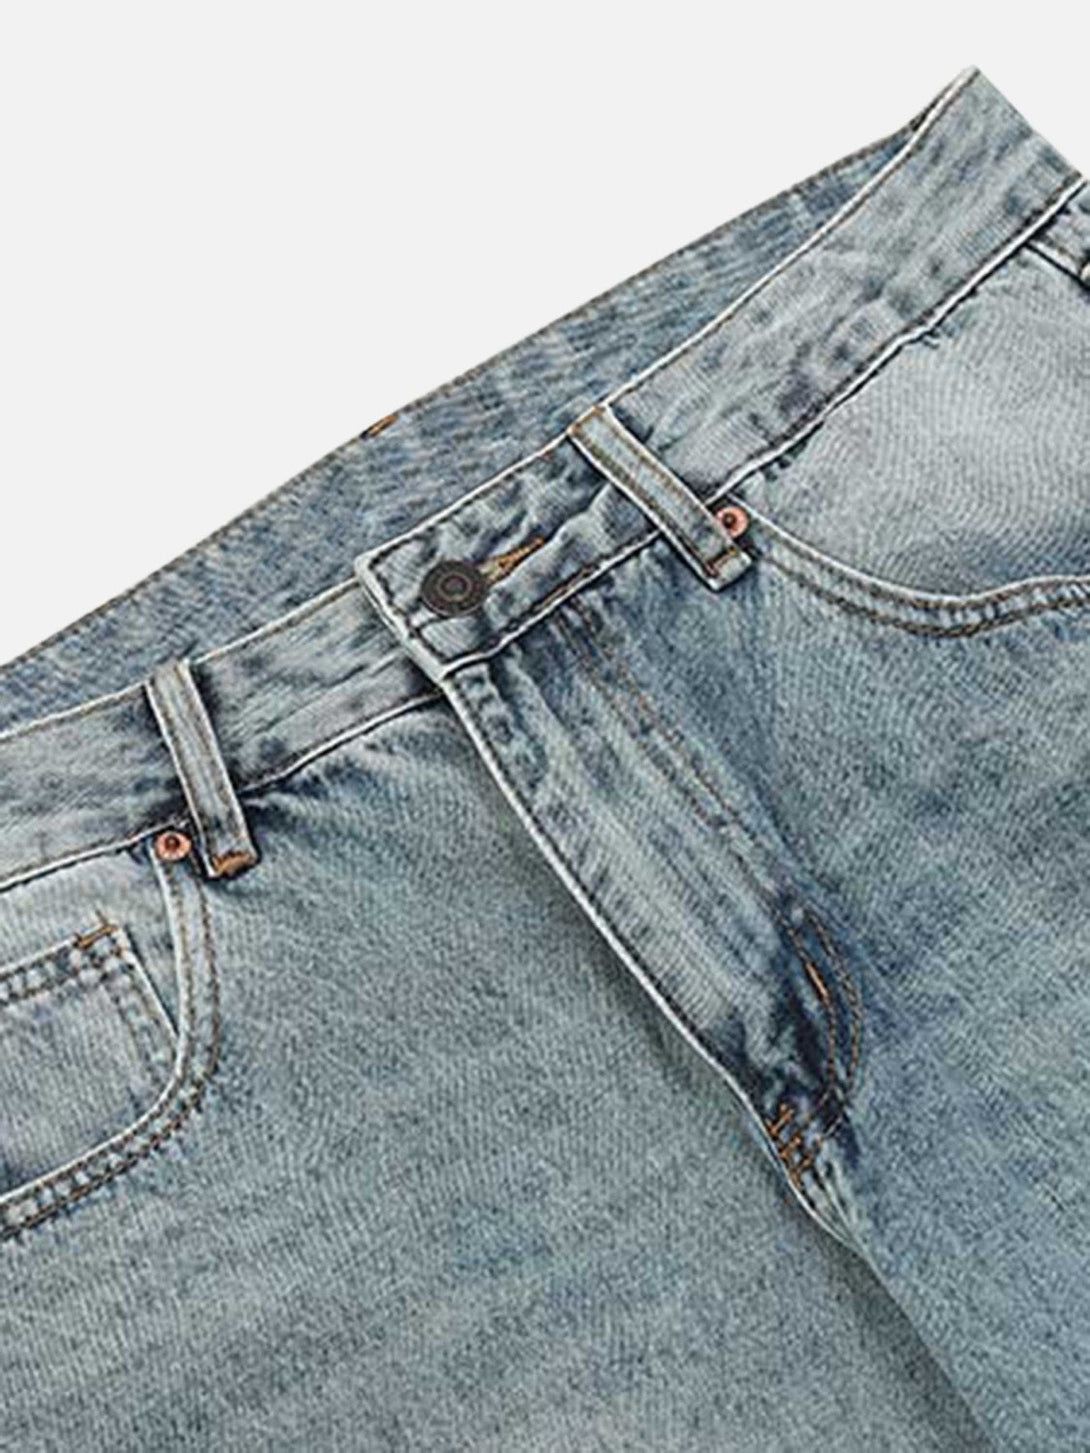 Majesda® - High Street Ripped Micro Flare Jeans- Outfit Ideas - Streetwear Fashion - majesda.com